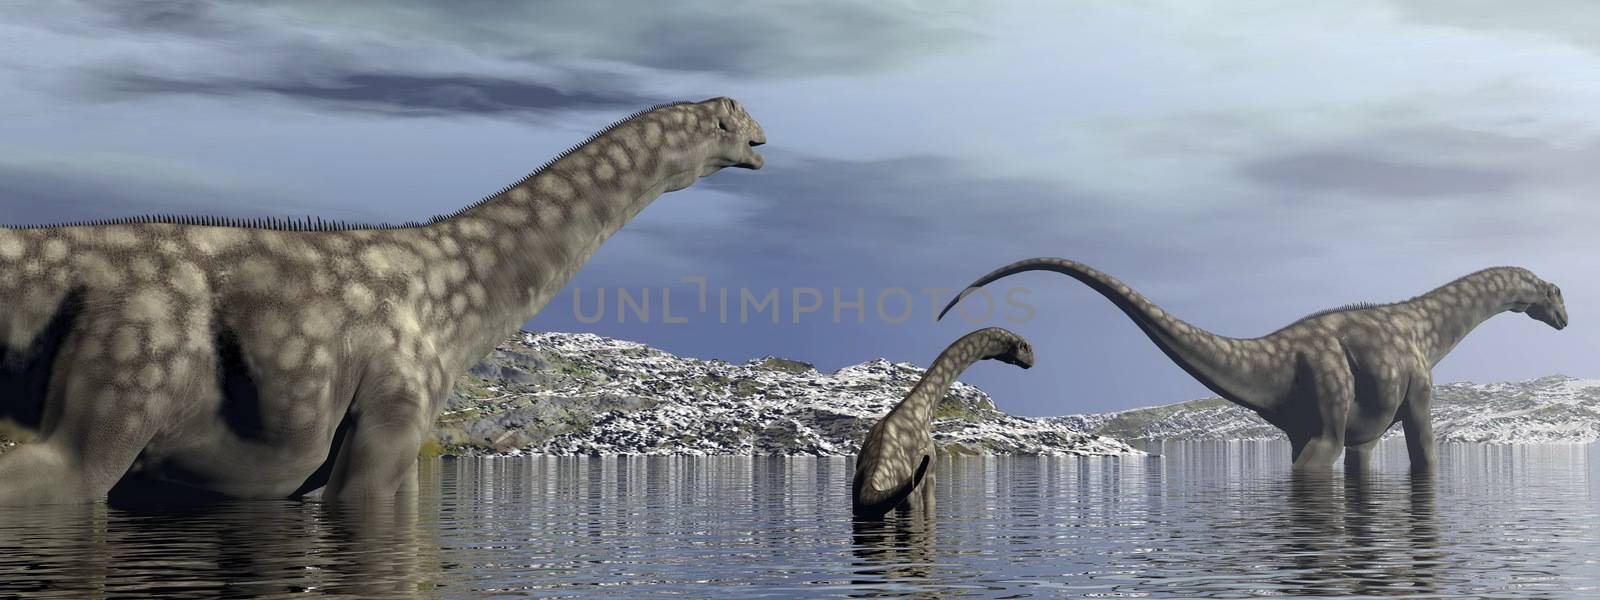 Argentinosaurus dinosaurs family - 3D render by Elenaphotos21